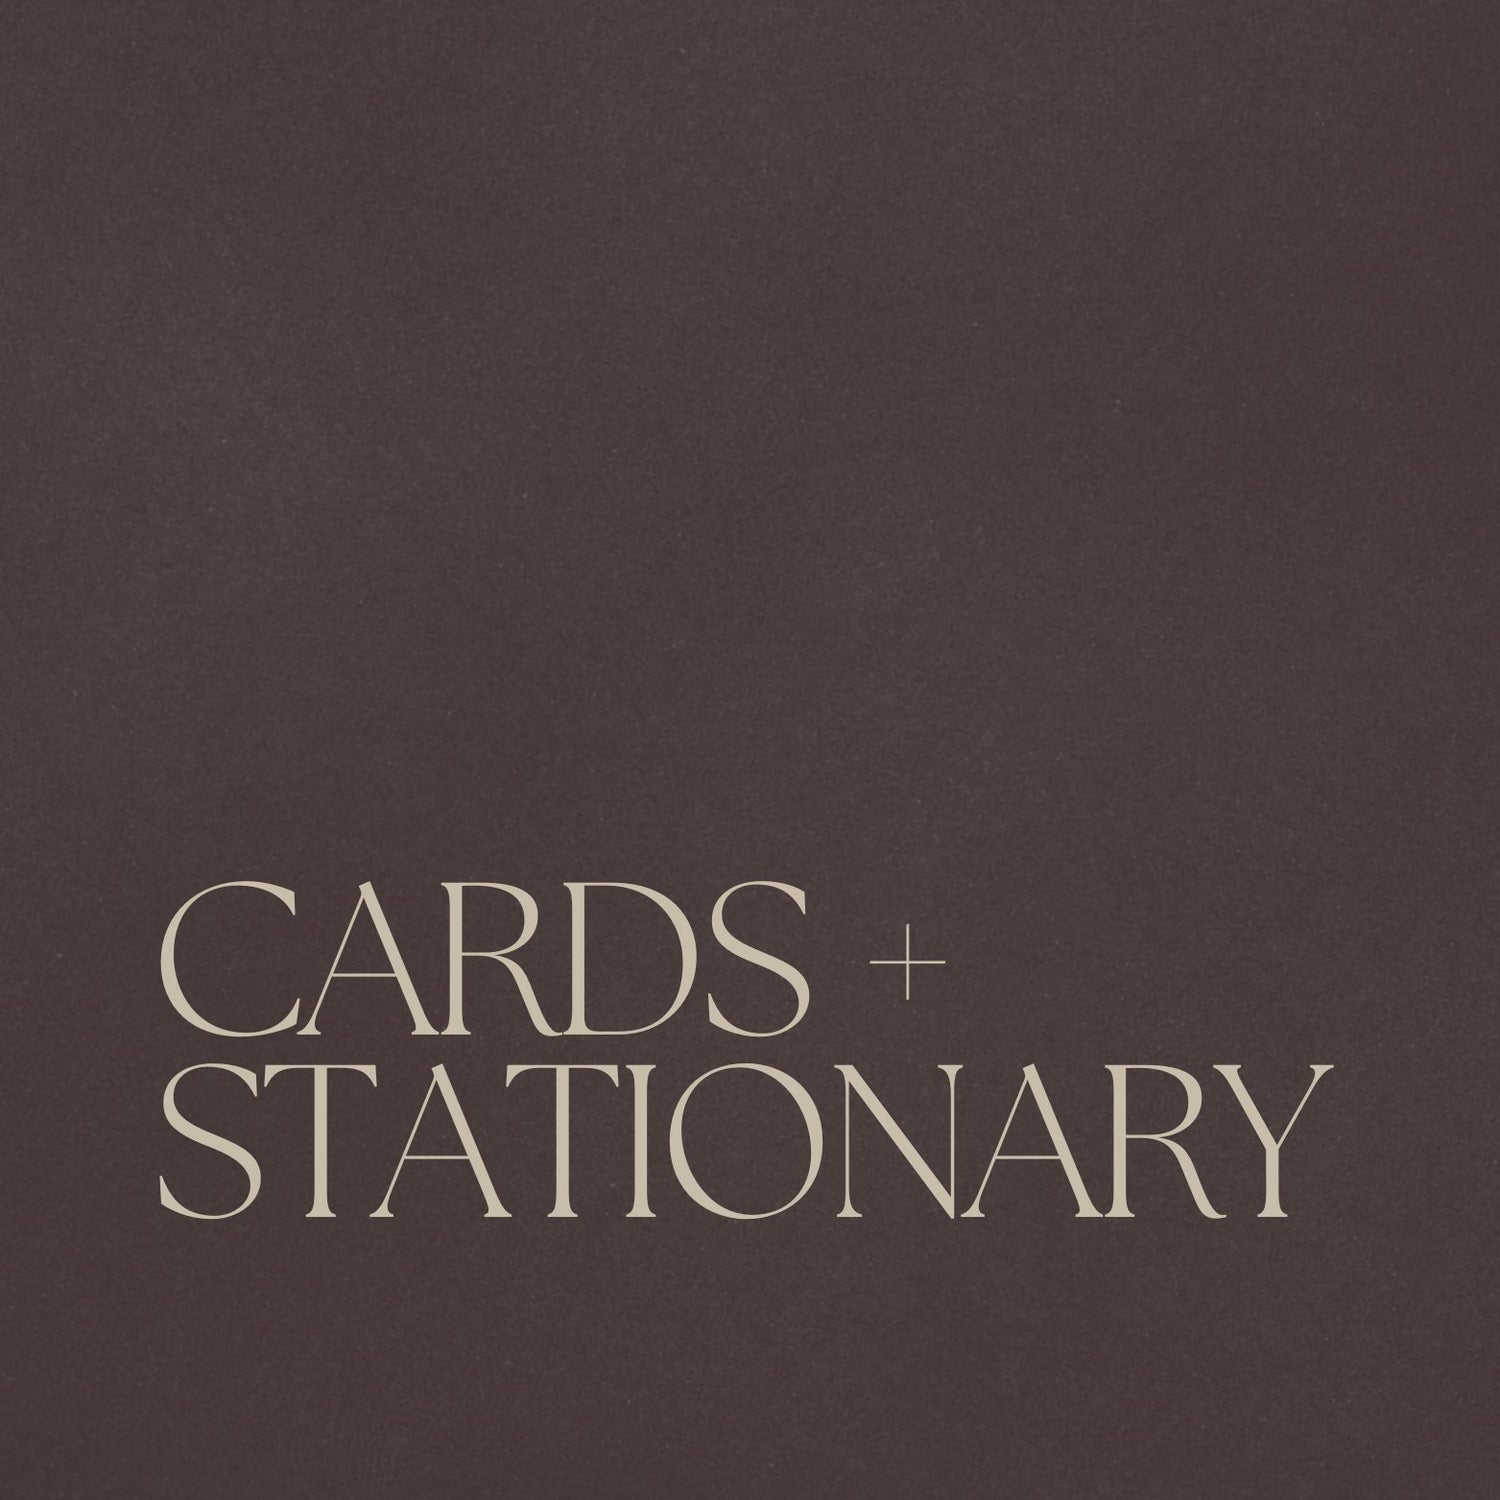 CARDS + STATIONARY